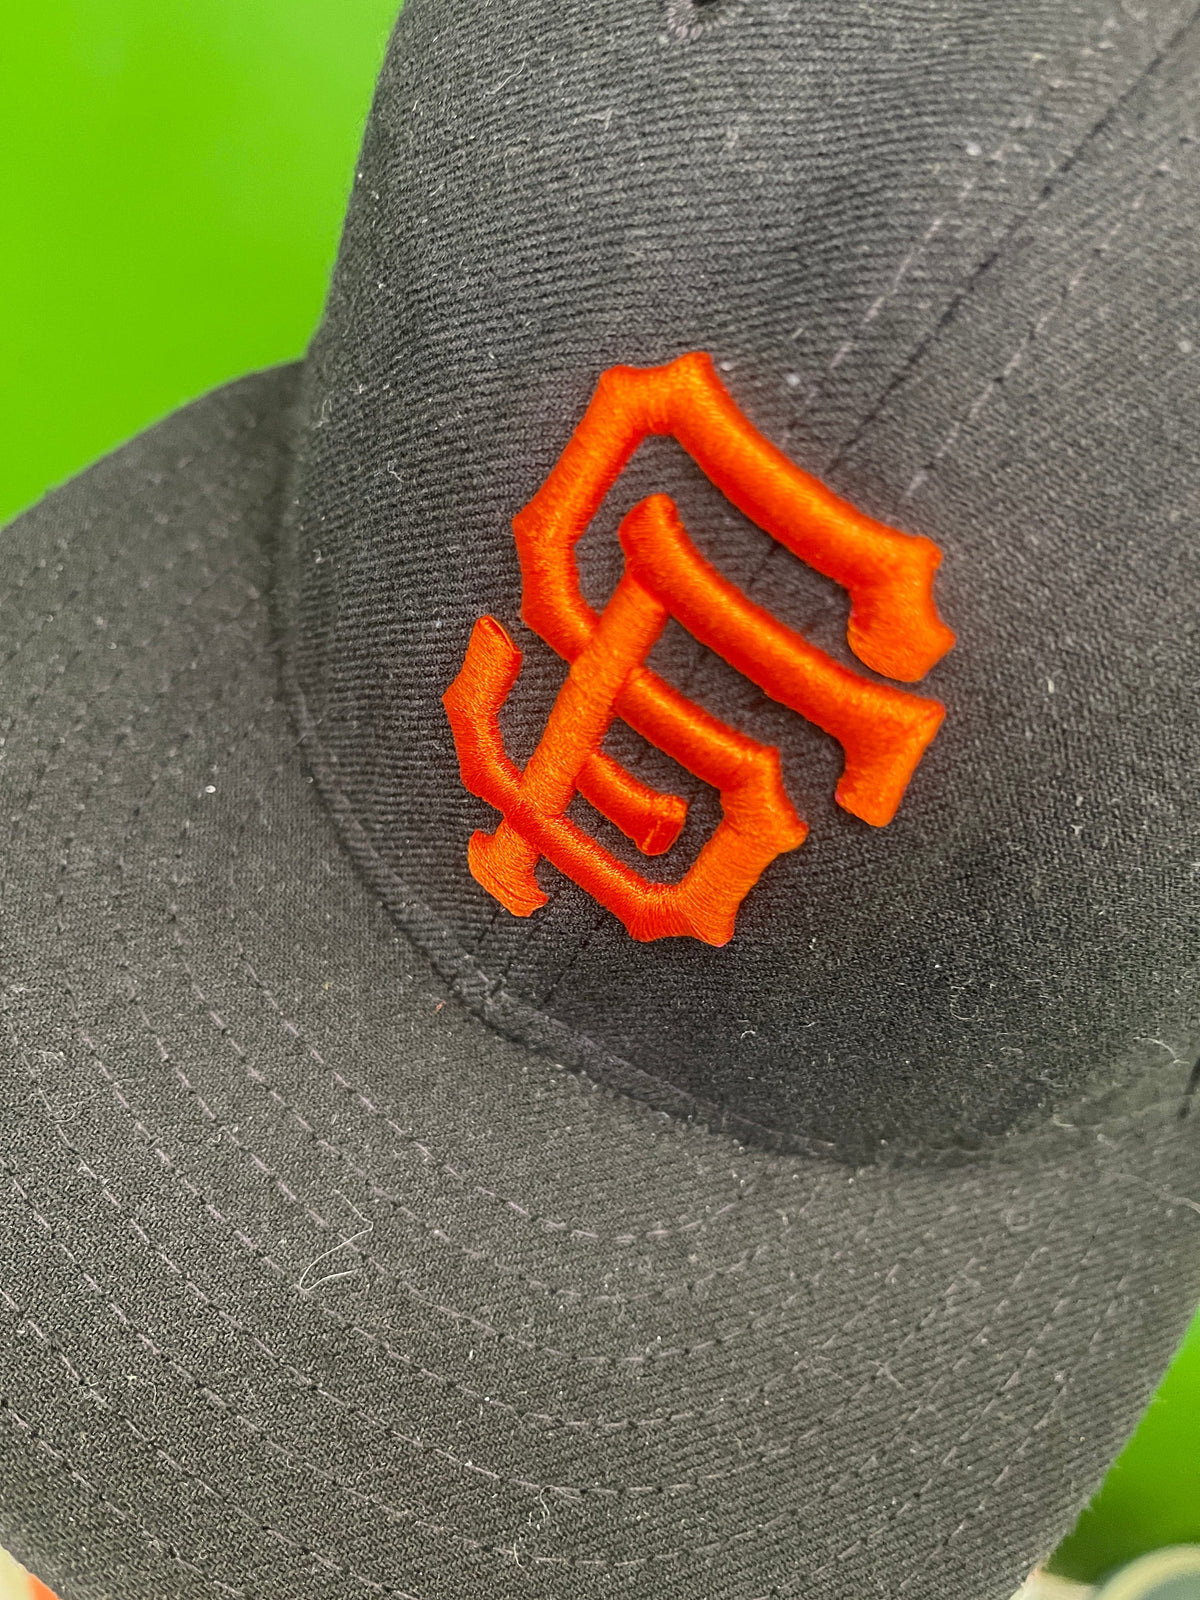 MLB San Francisco Giants New Era 59FIFTY Baseball Hat / Cap Size 7-3/4